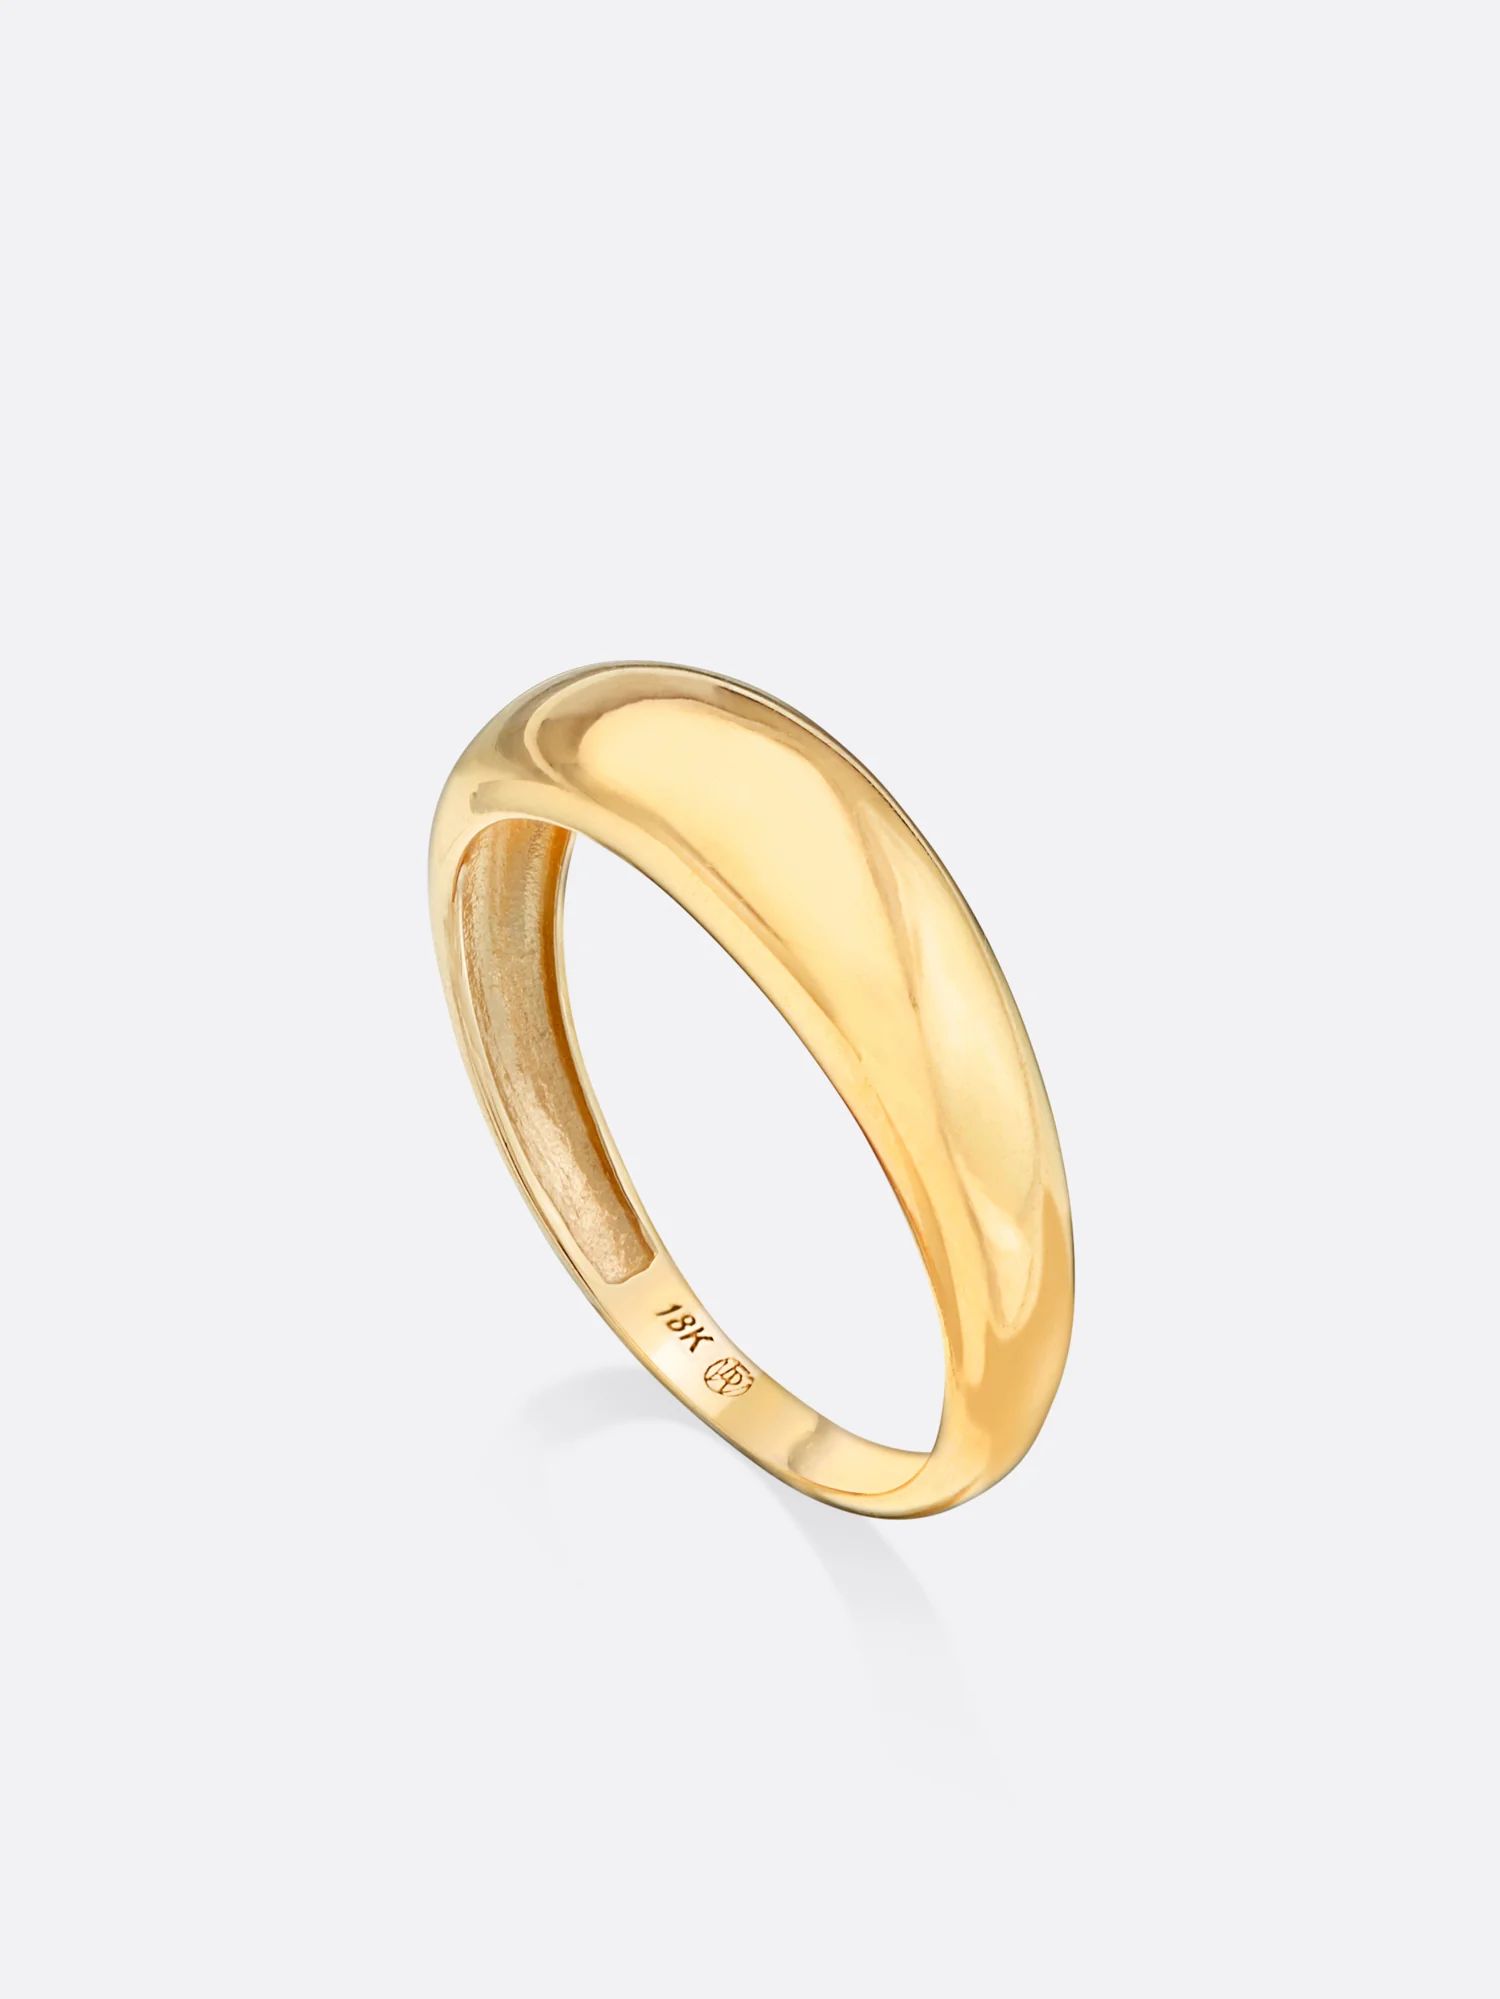 Brochu Walker | Women's Fine Jewelry Icons Yellow Gold Everyday Dome Ring | Brochu Walker